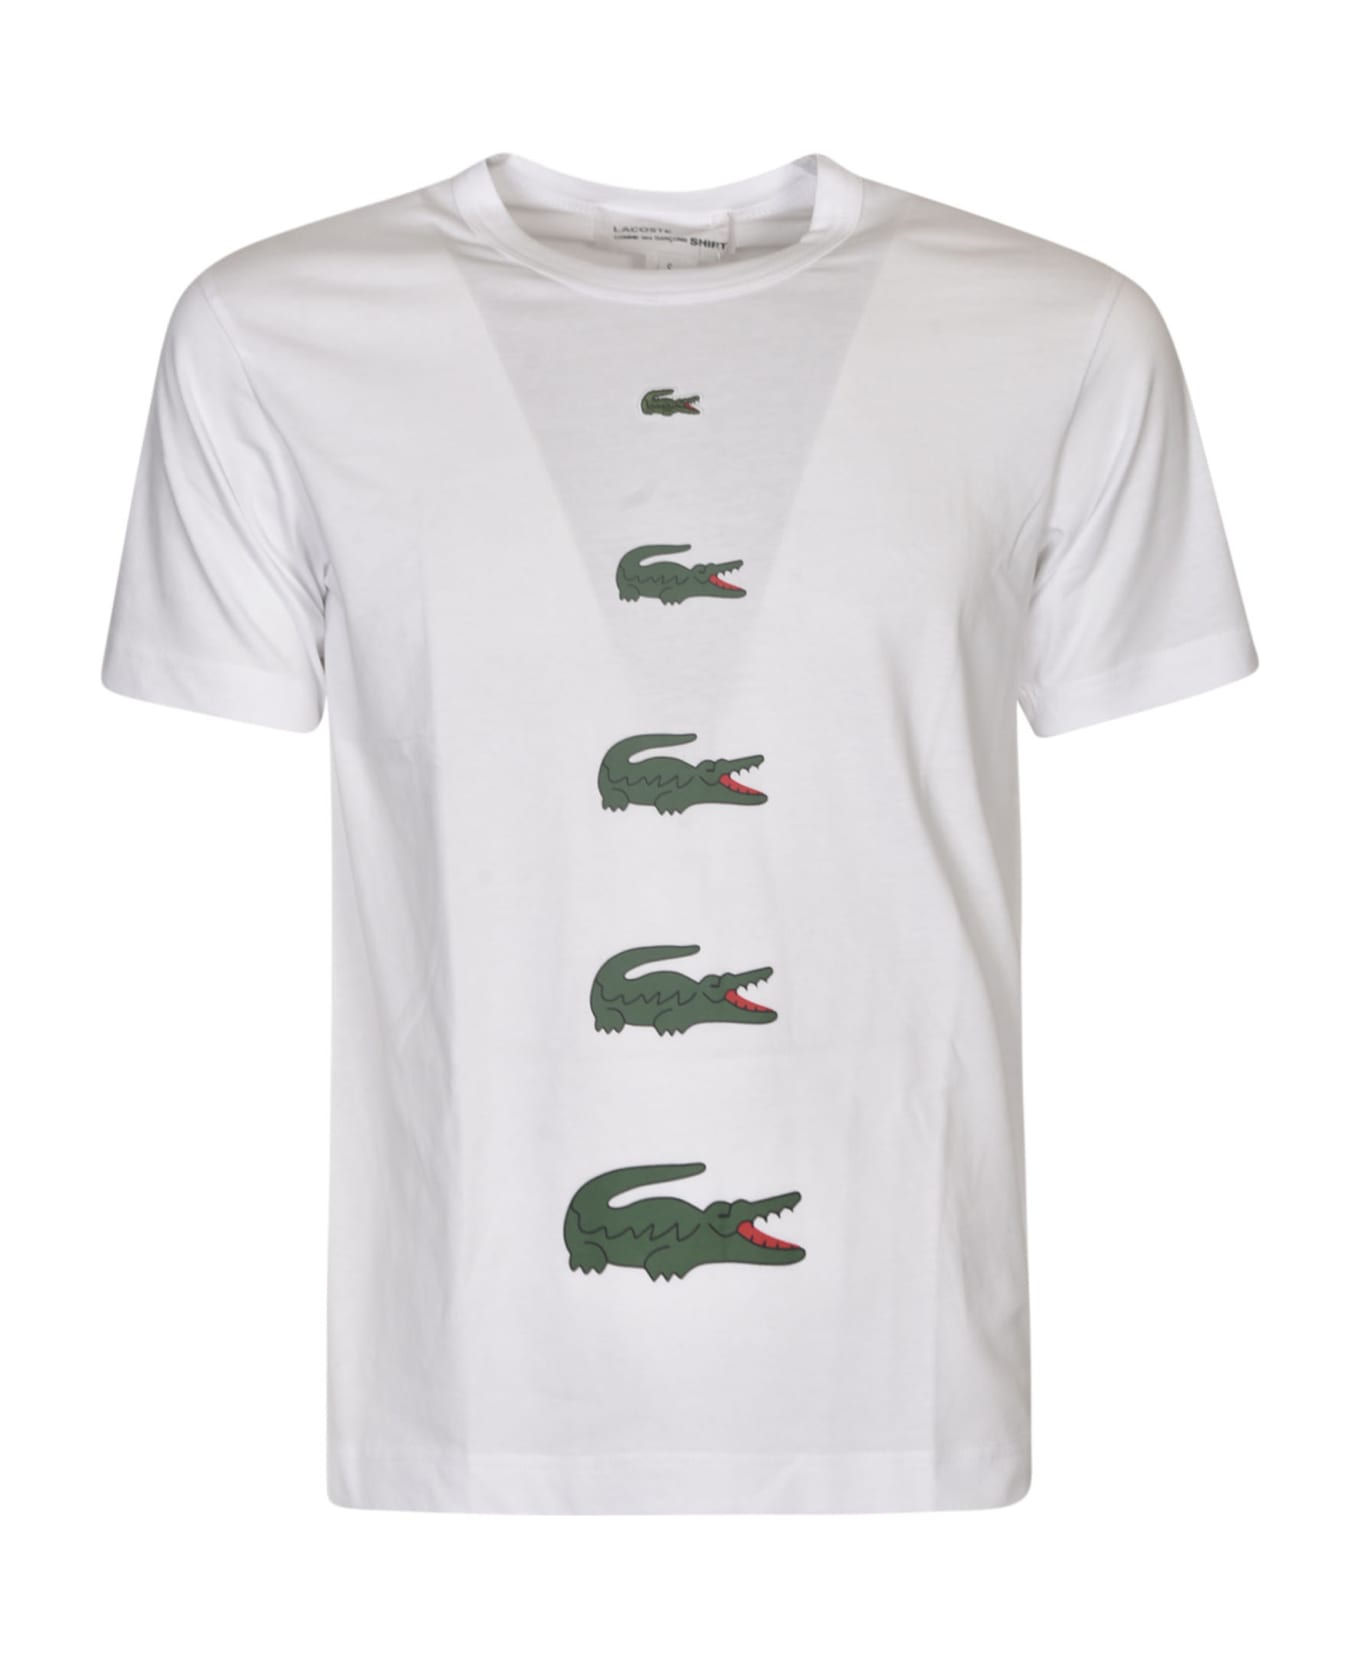 Comme des Garçons Croco Embroidered T-shirt - White シャツ